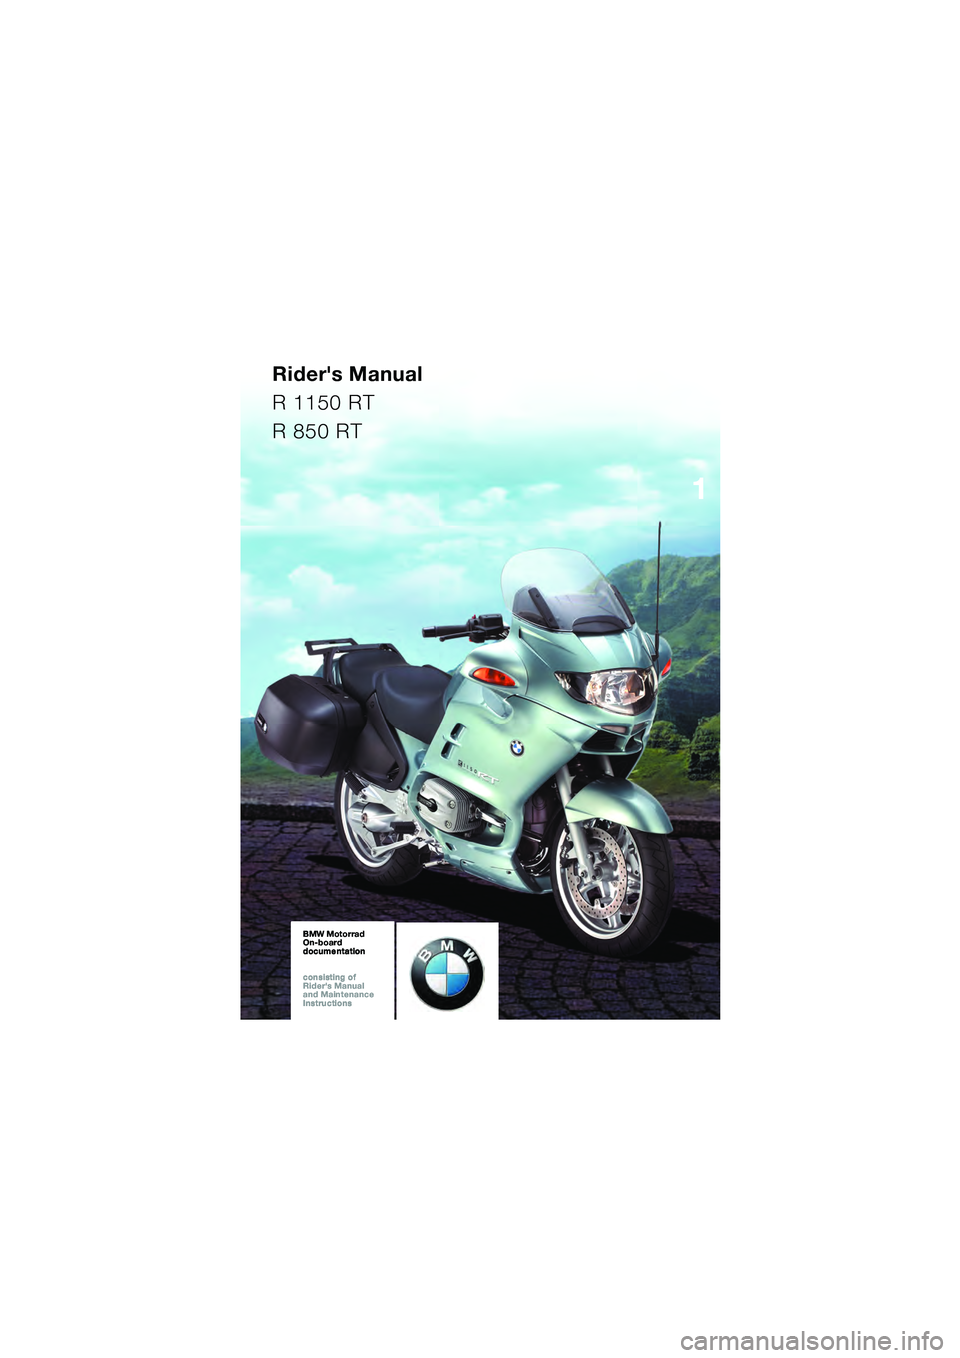 BMW MOTORRAD R 1150 RT 2002  Riders Manual (in English) 1
BMW Motorrad
On-board  
documentation
consisting of  
Riders Manual  
and Maintenance  
InstructionsBMW Motorrad
On-board  
documentation
consisting of  
Riders Manual  
and Maintenance  
Instruct